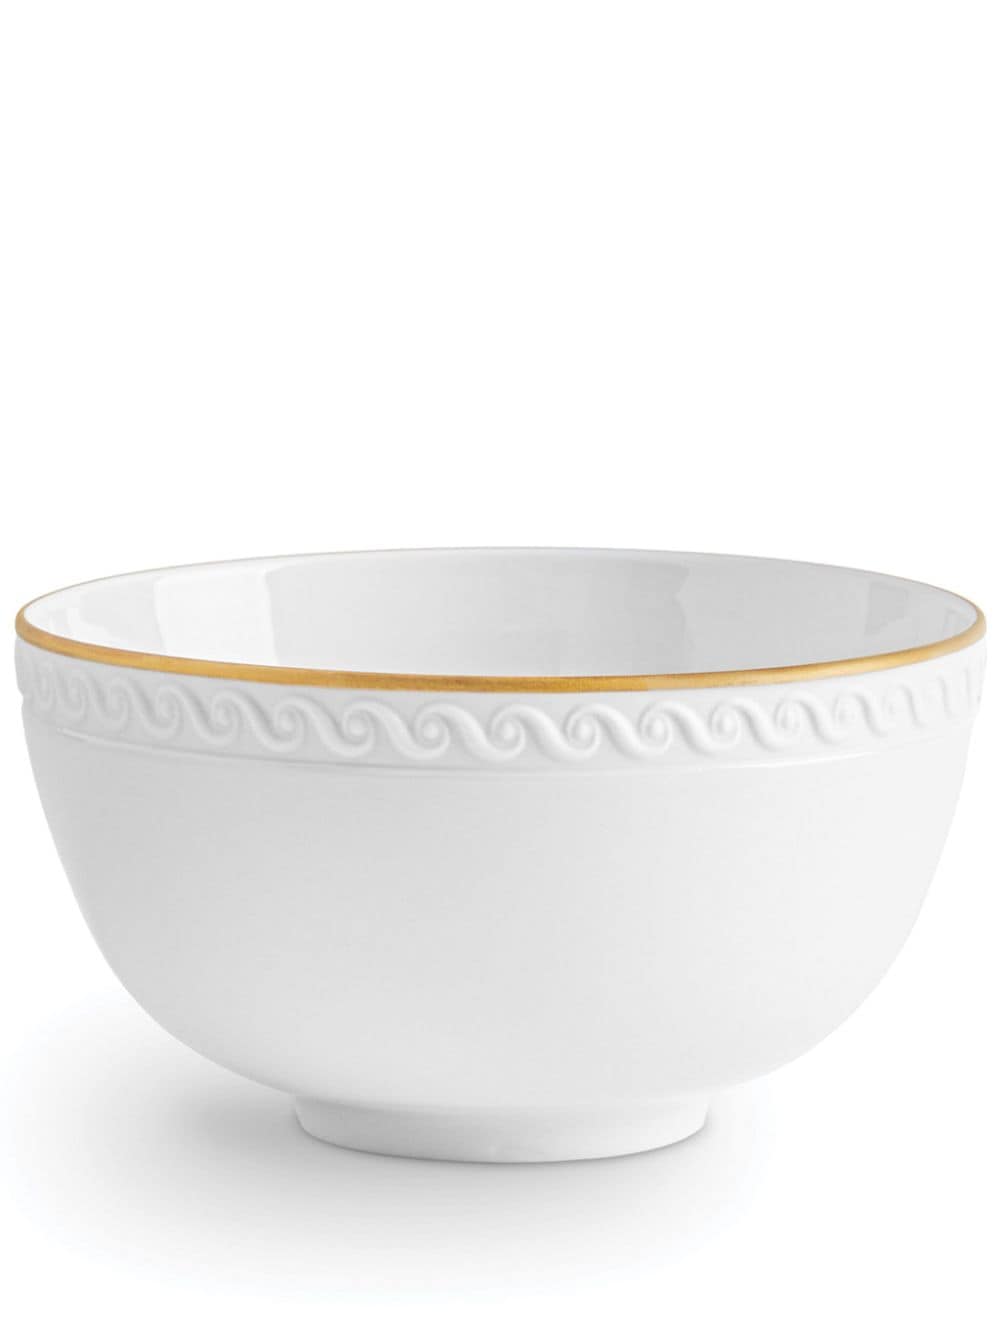 L'Objet Neptune porcelain cereal bowl (14cm) - White von L'Objet